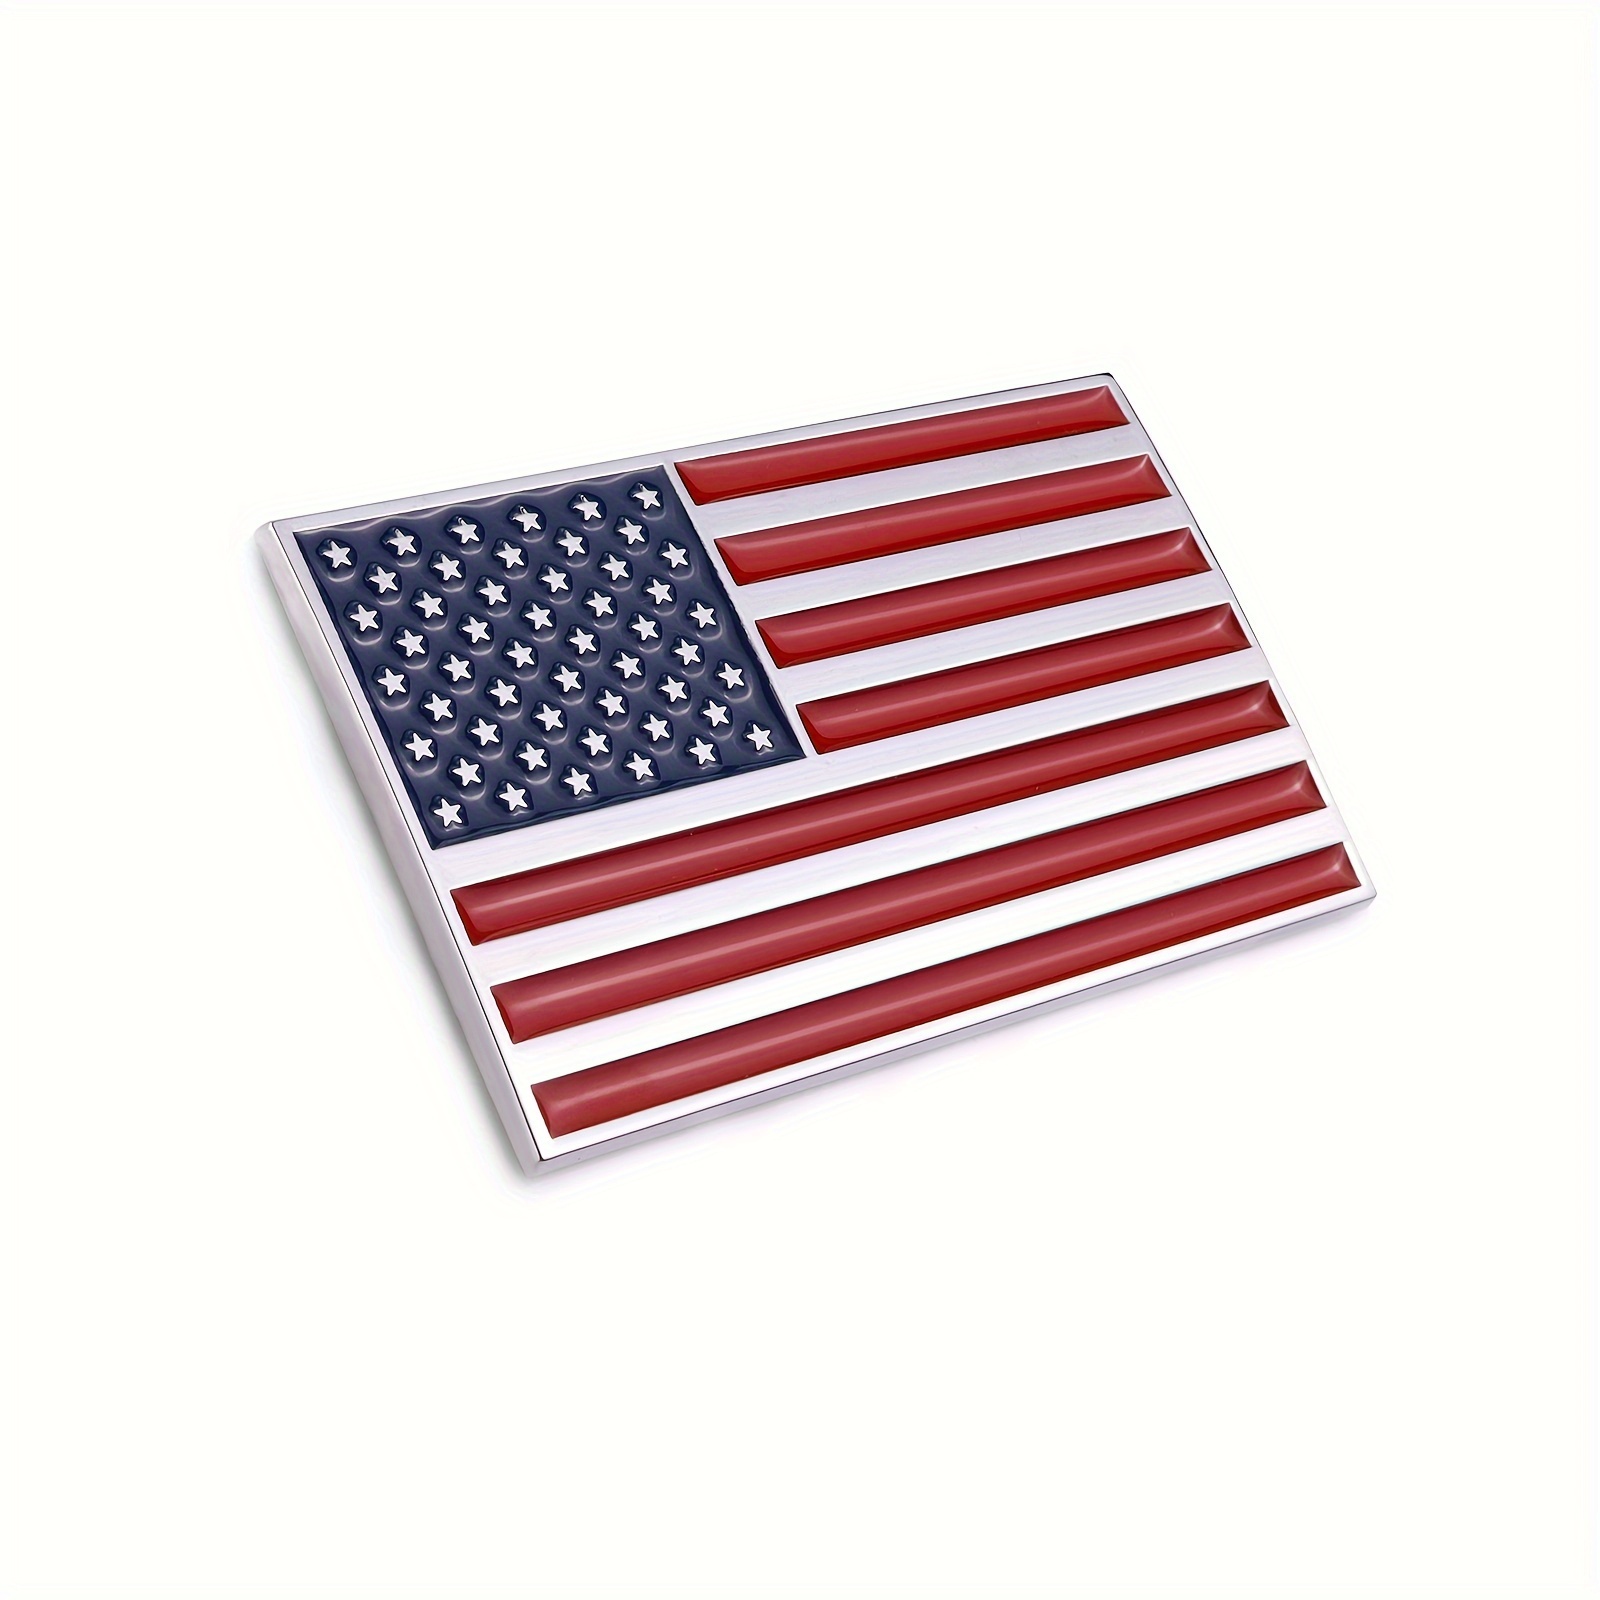 

3d American Flag Metal Car Sticker, 3.15" X 2" Usa Flag Decal, Zinc Alloy Emblem For Truck, Car, Motocycle, Boat